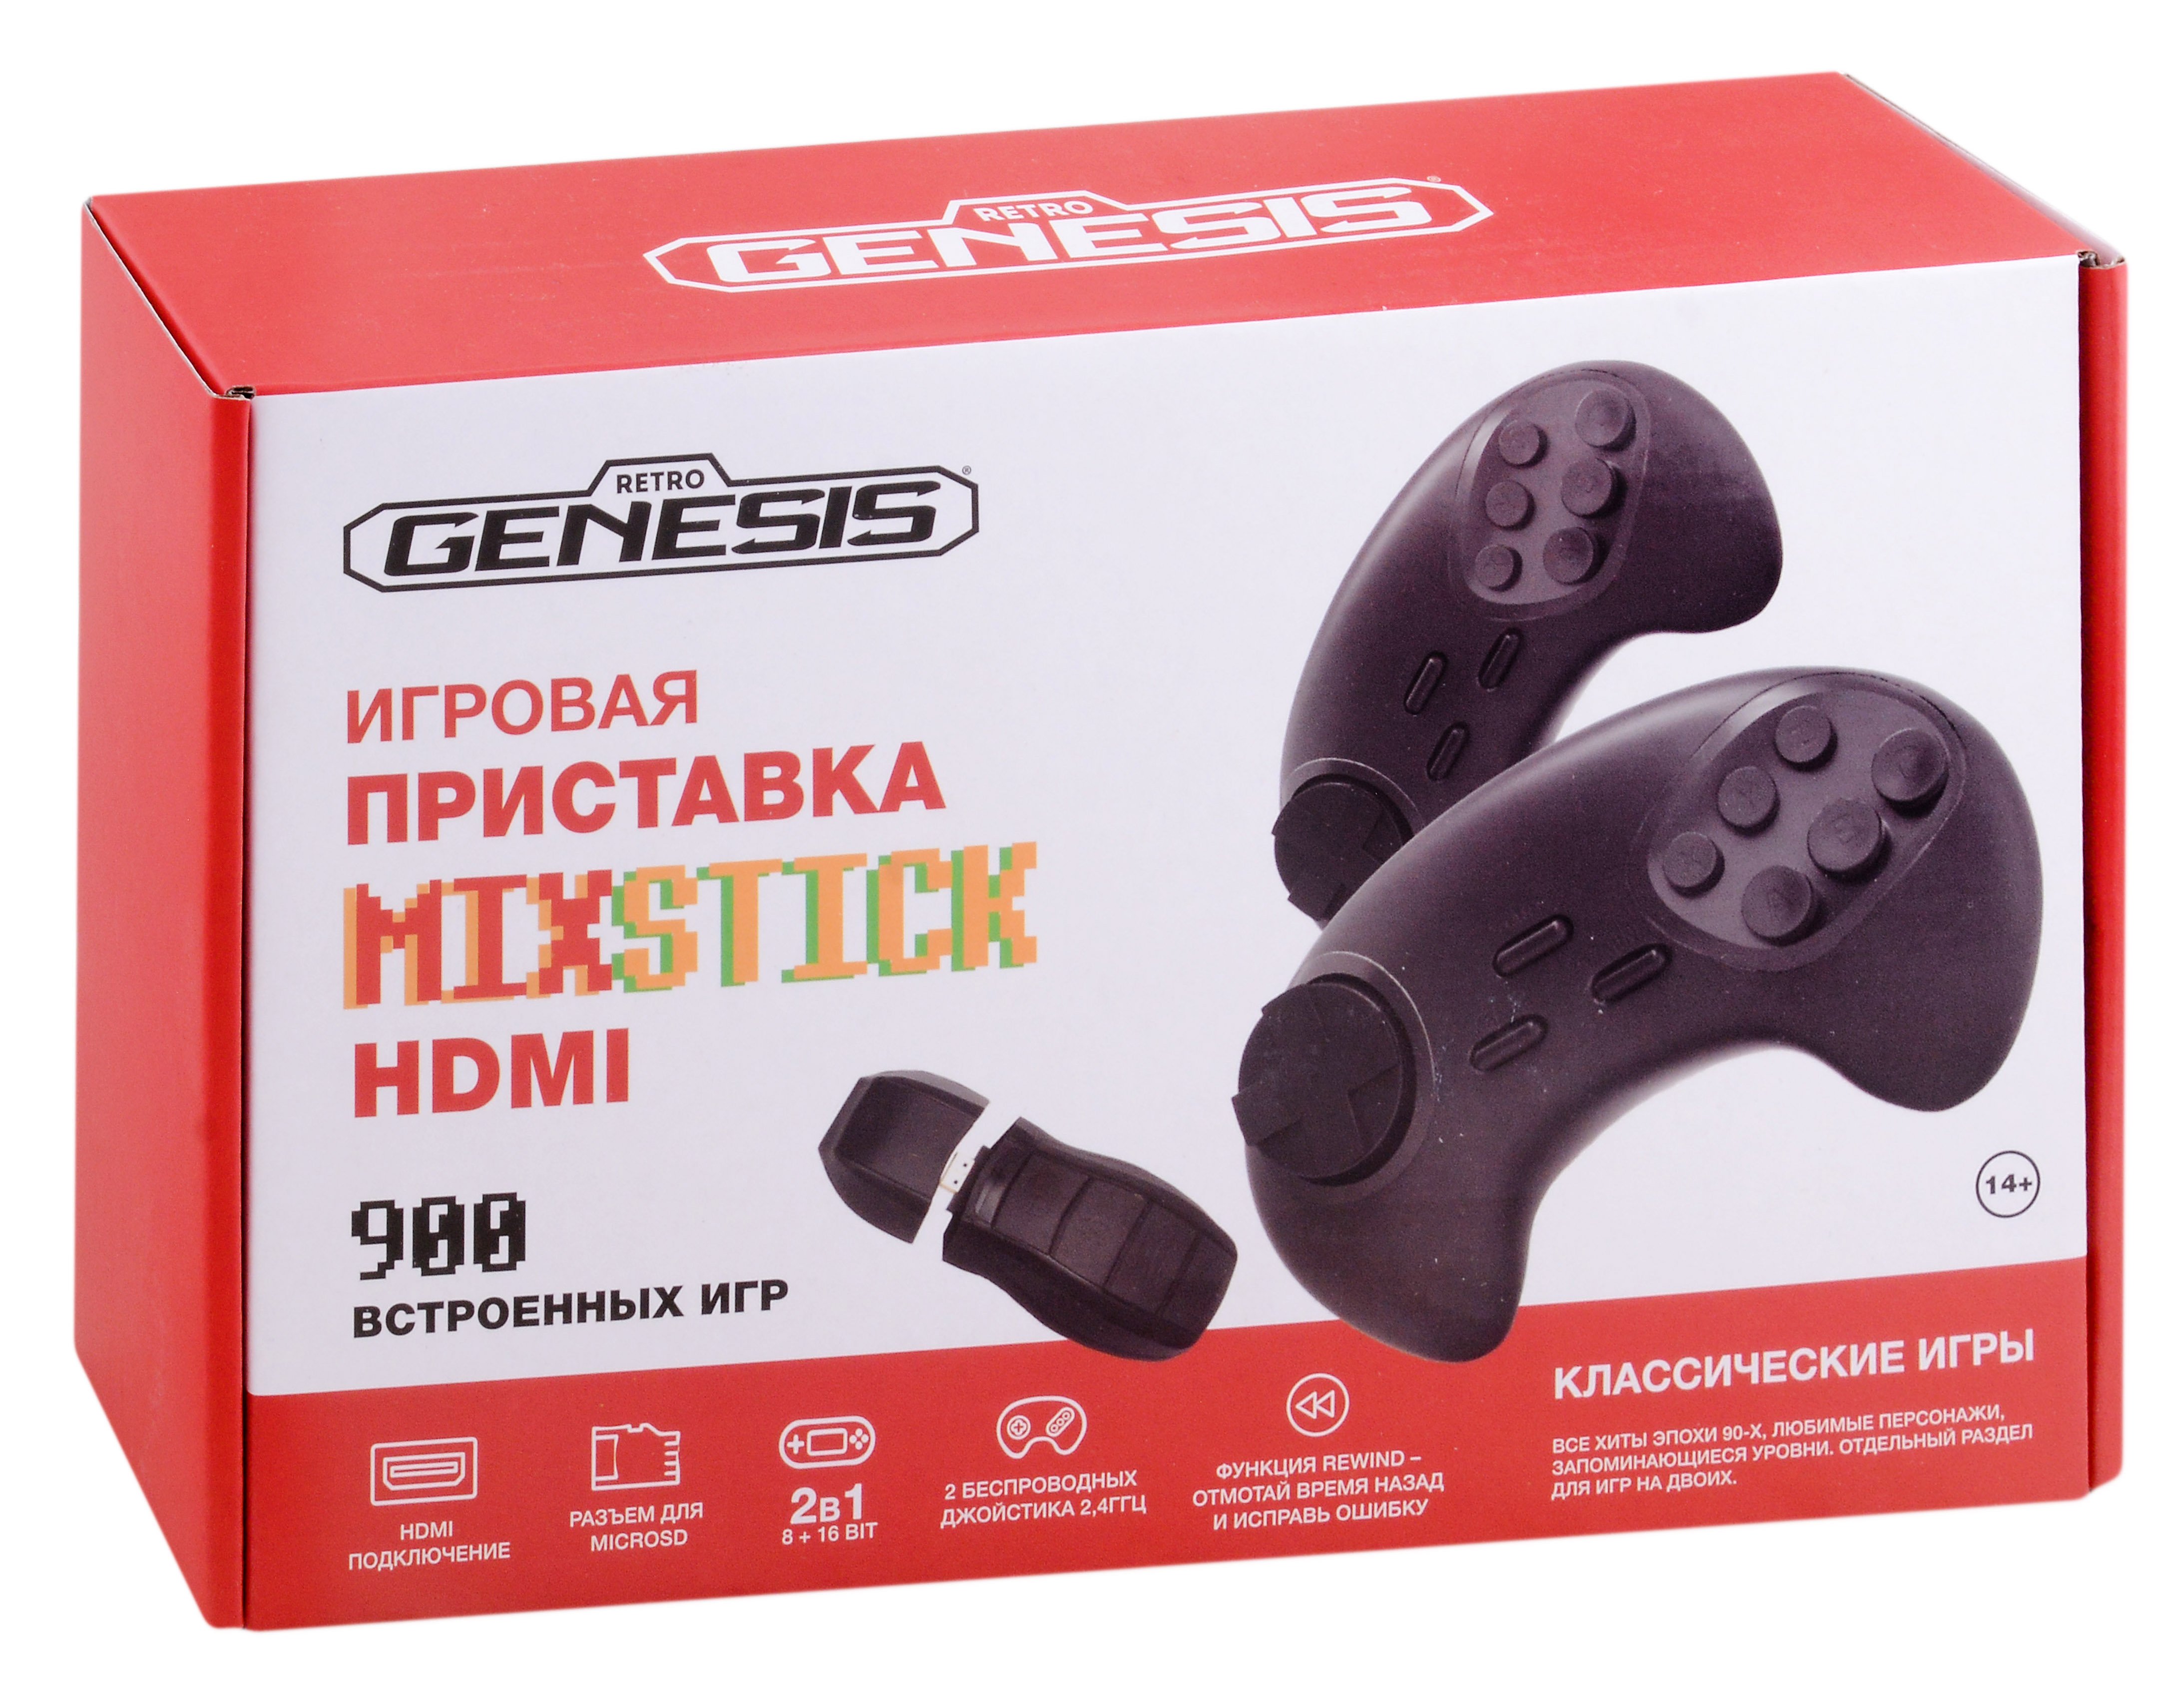 Retro Genesis MixStick HD (900 , 2  , HDMI, 8+16Bit, Rewind) model: RS8